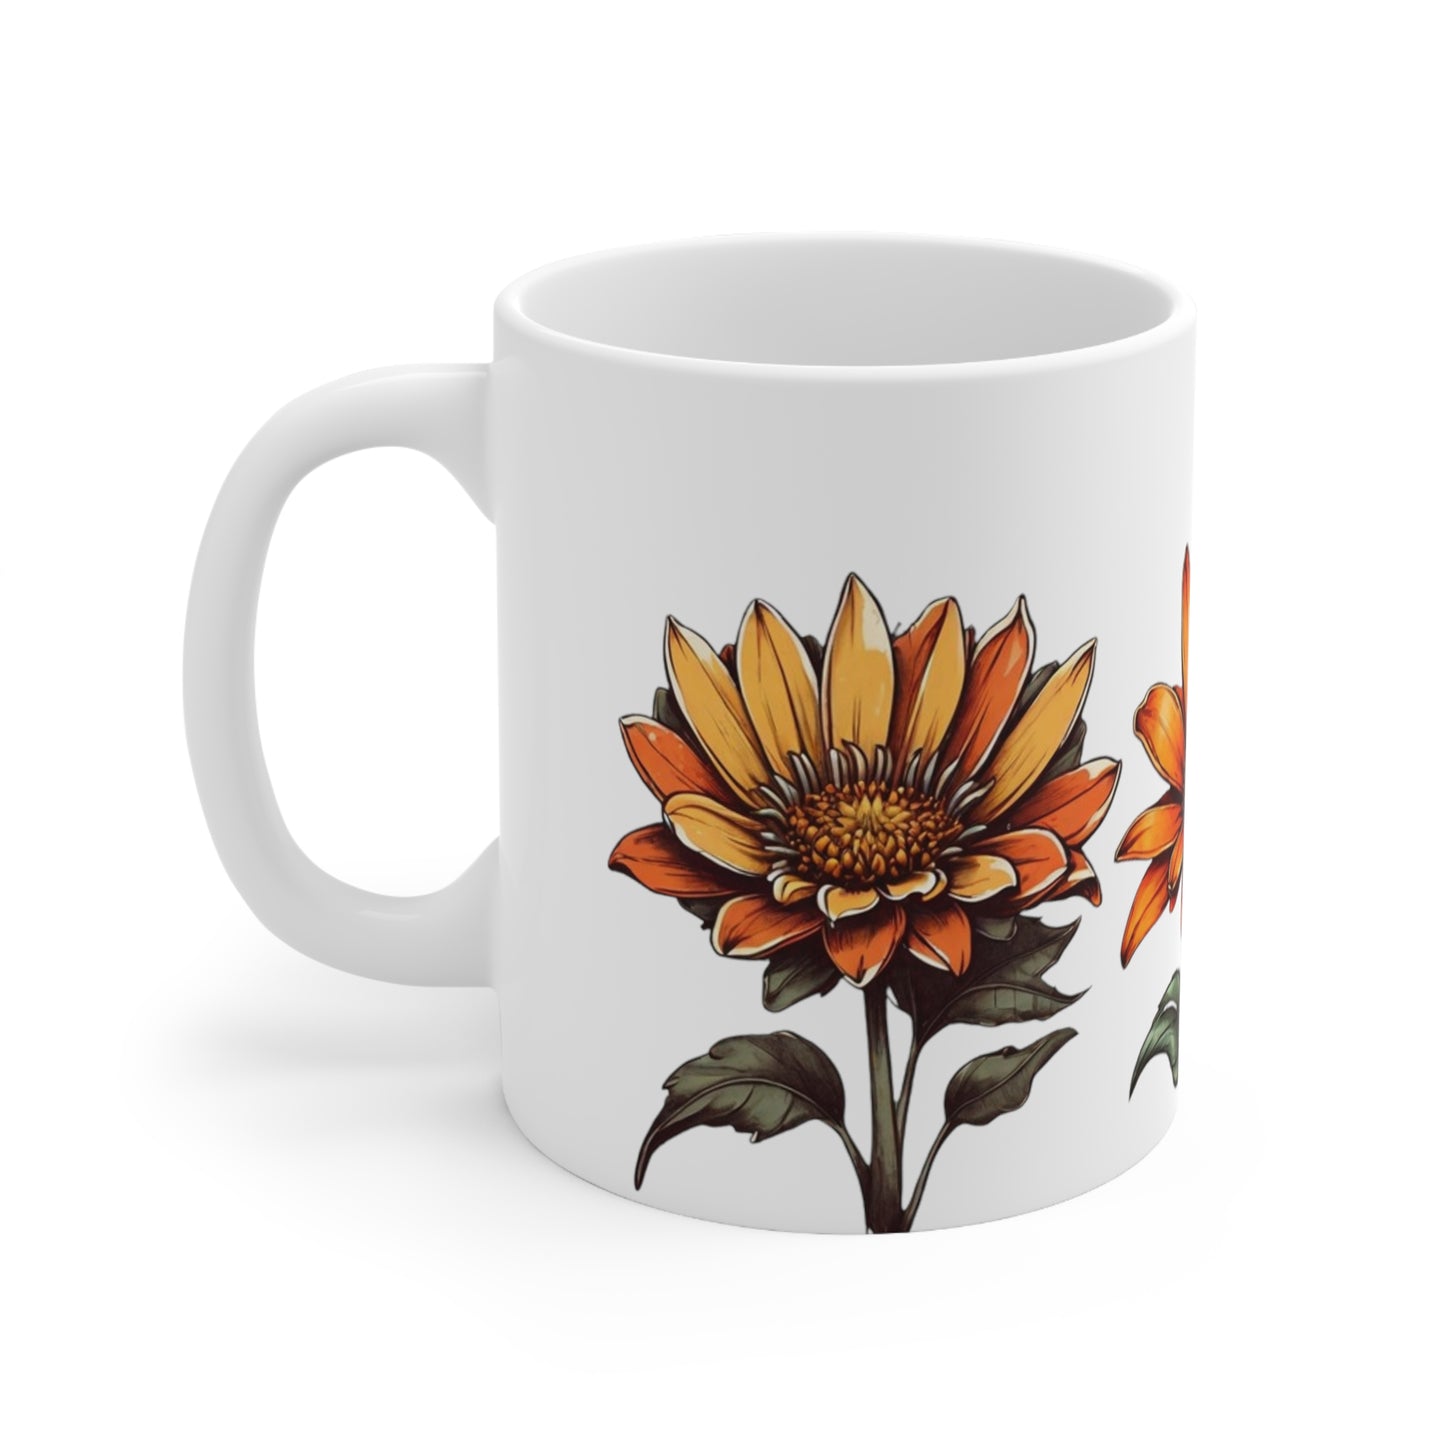 South African (Gazania) Daisy Flower Mug - Ceramic Coffee Mug 11oz